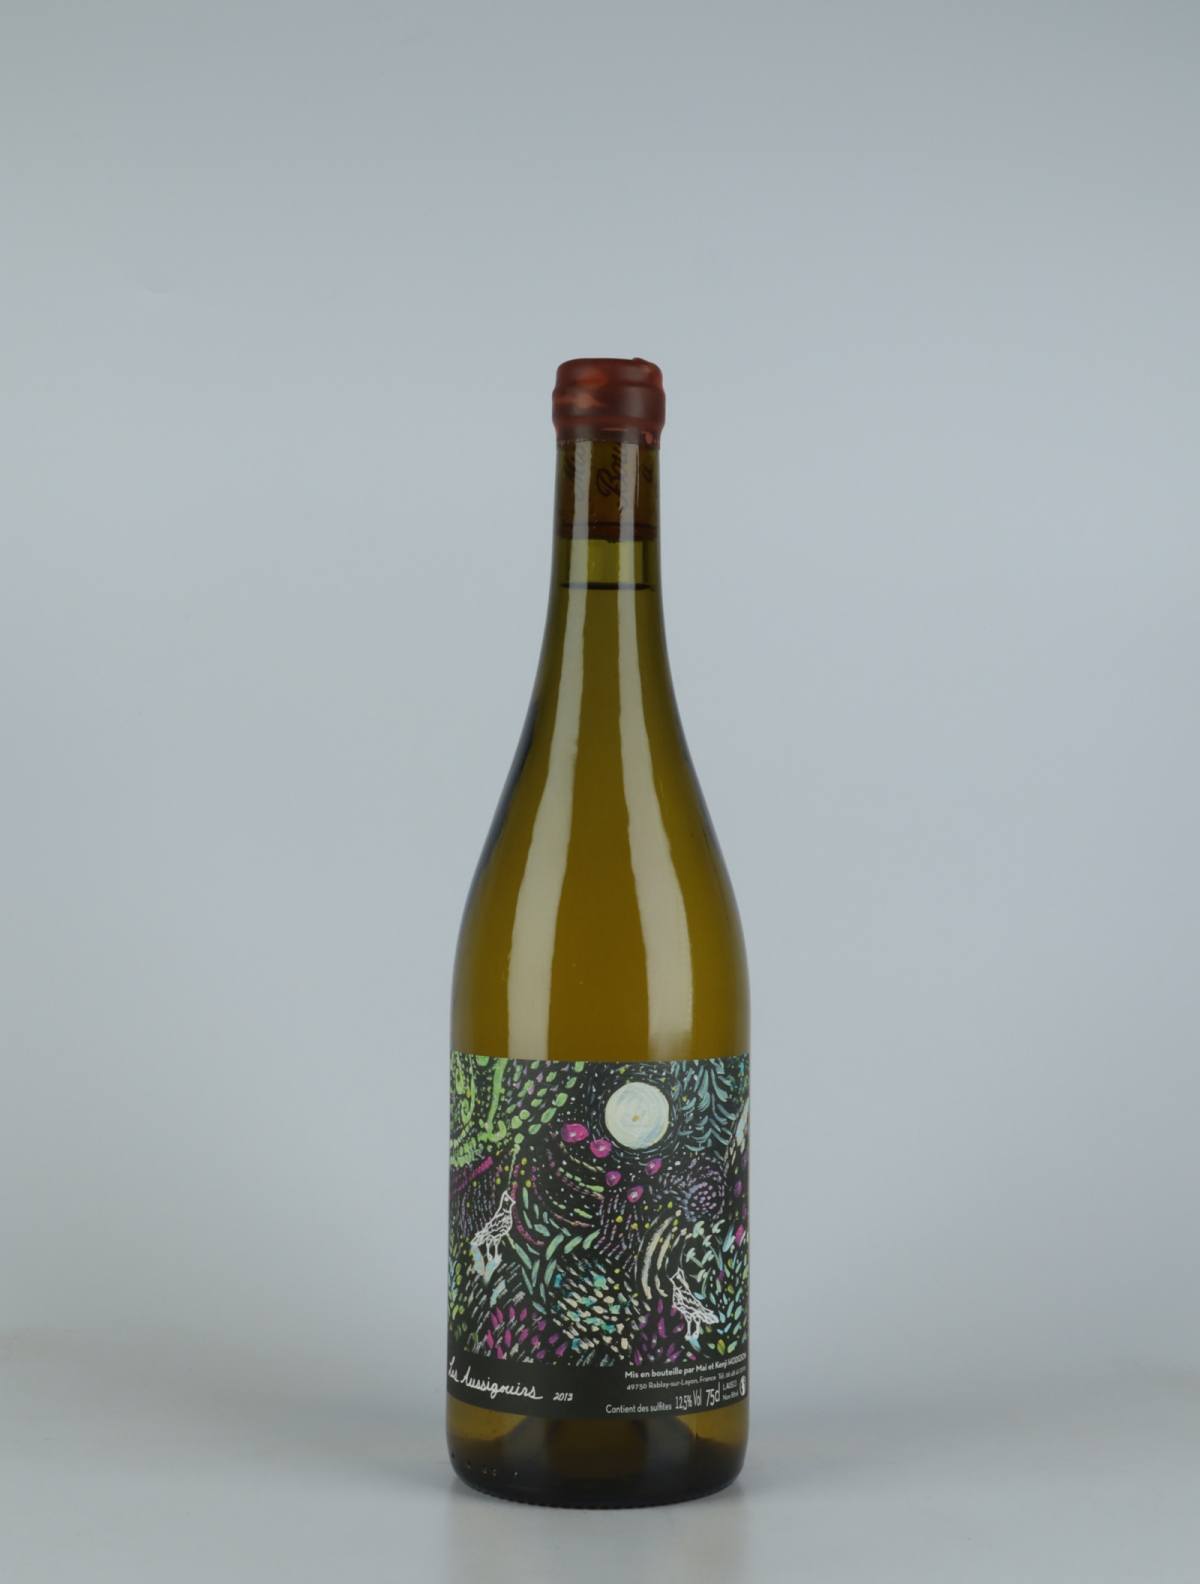 A bottle 2013 Les Aussigouins White wine from Mai et Kenji Hodgson, Loire in France